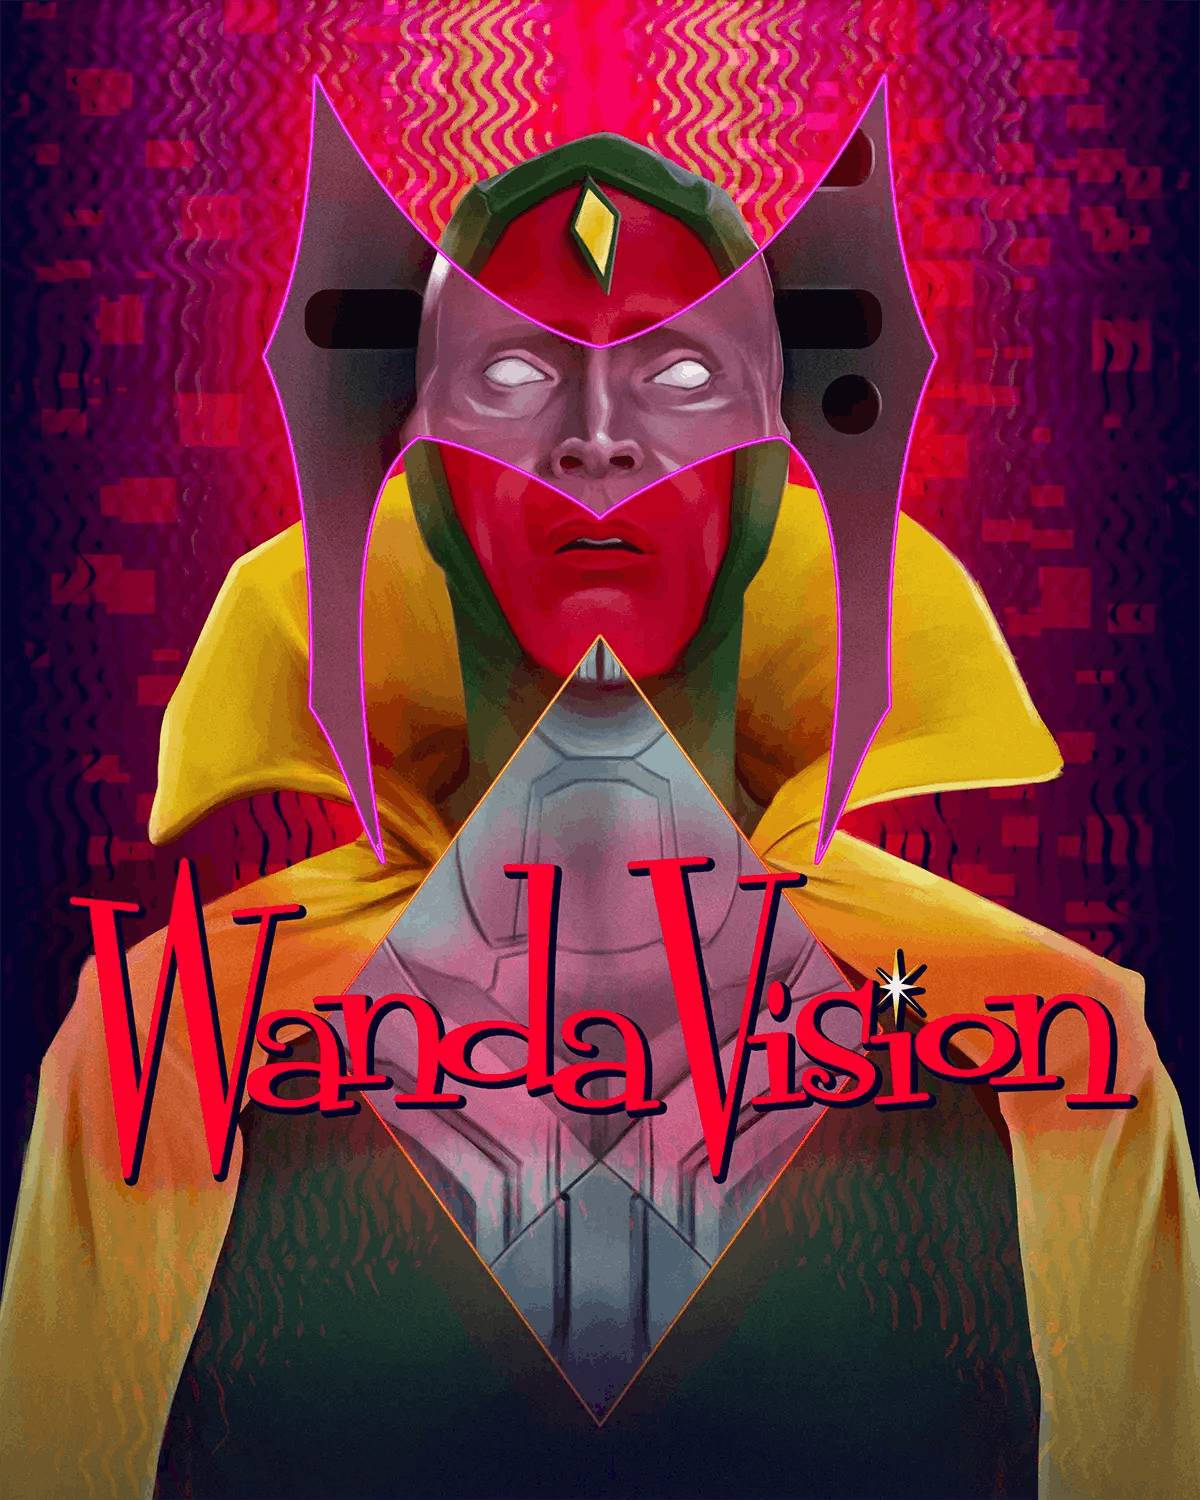 A WandaVision poster